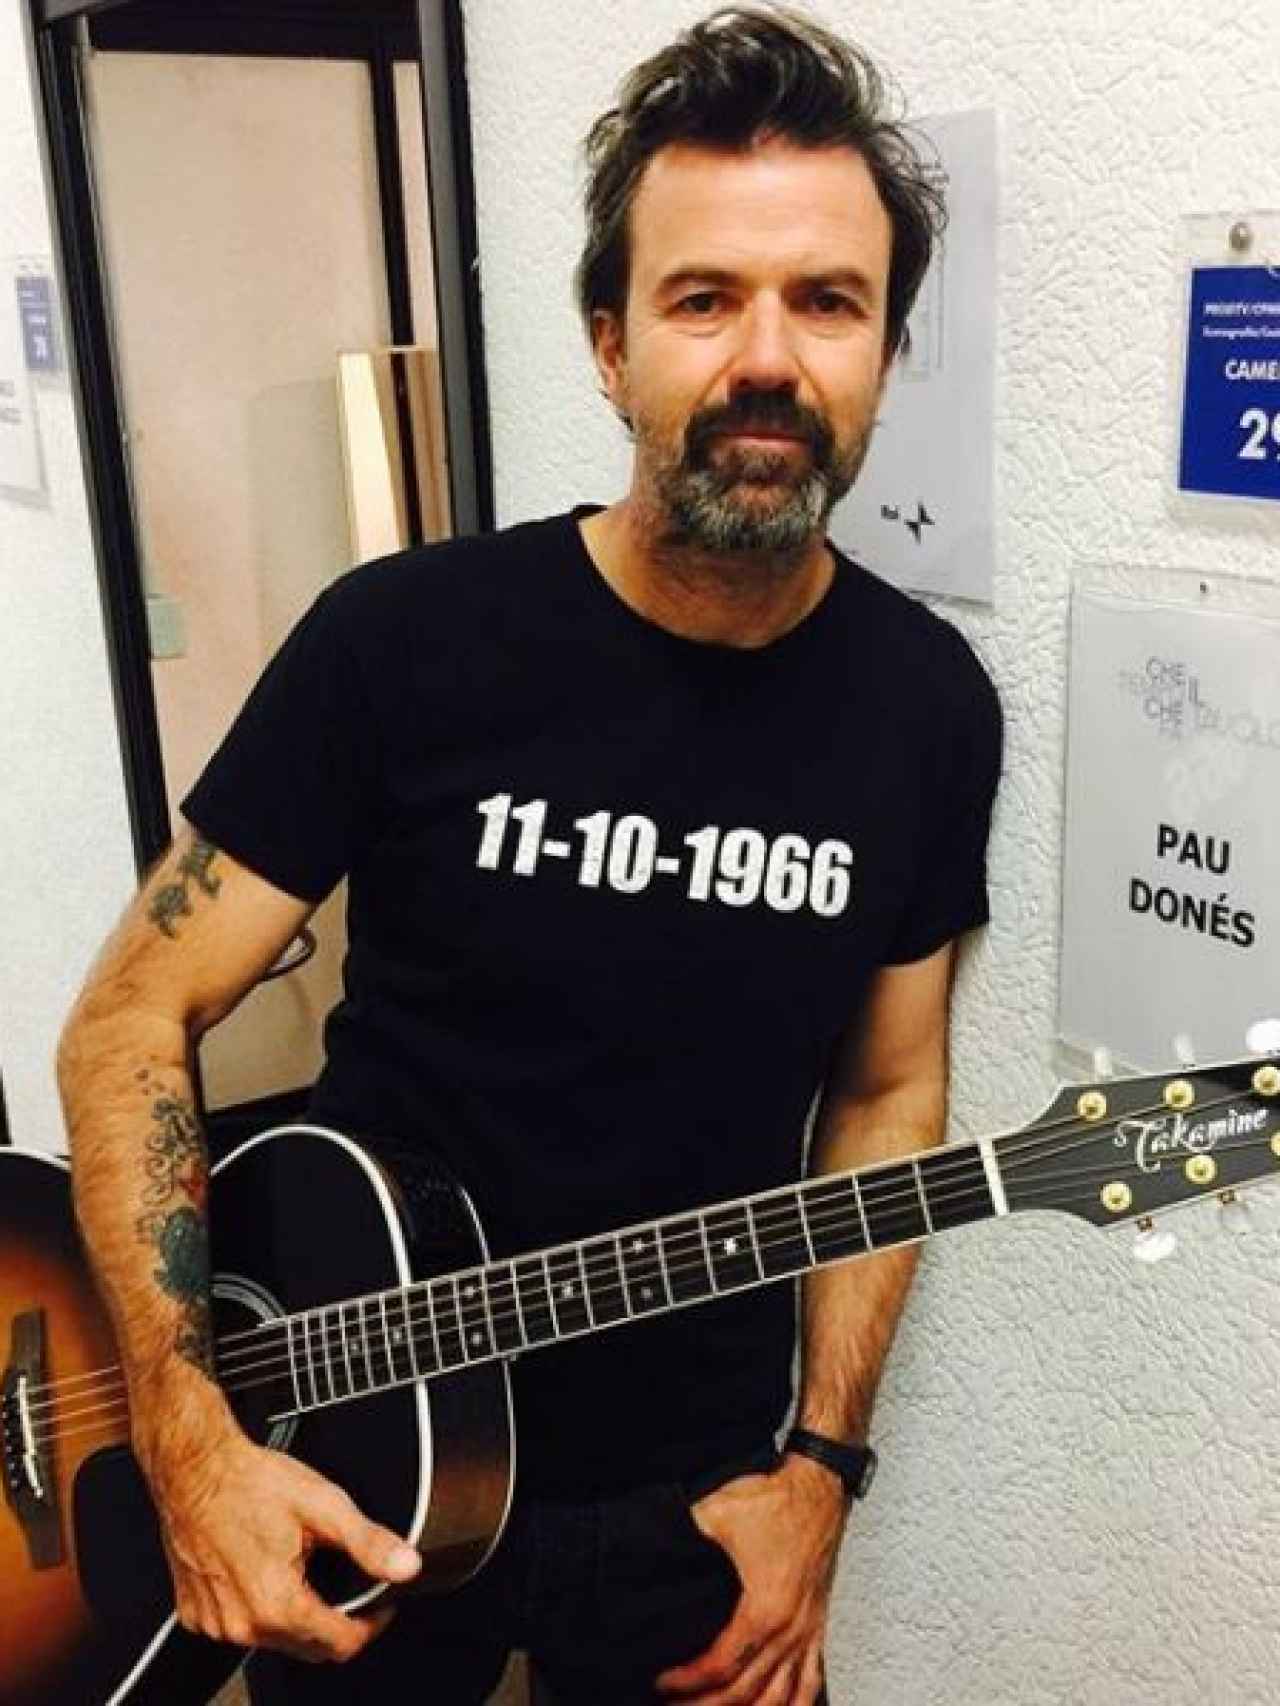 Pau Donés, inseparable de su guitarra.